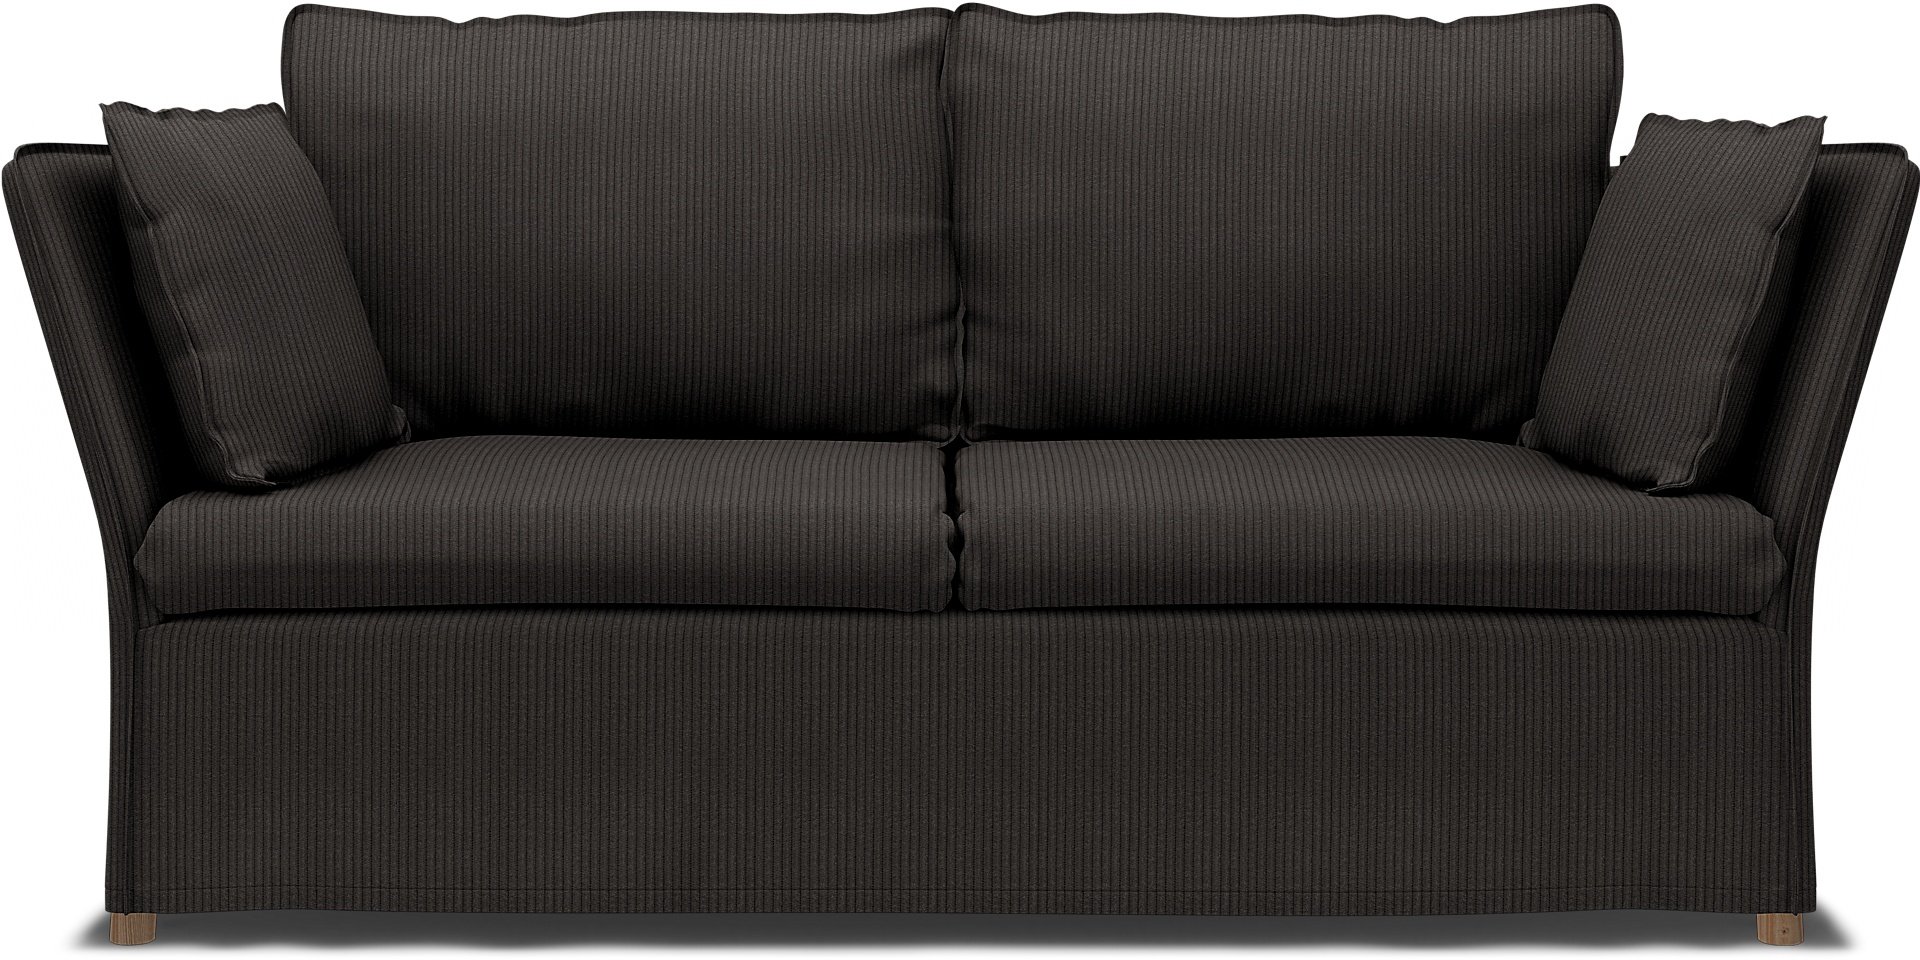 IKEA - Backsalen 2 seater sofa, Slate, Corduroy - Bemz